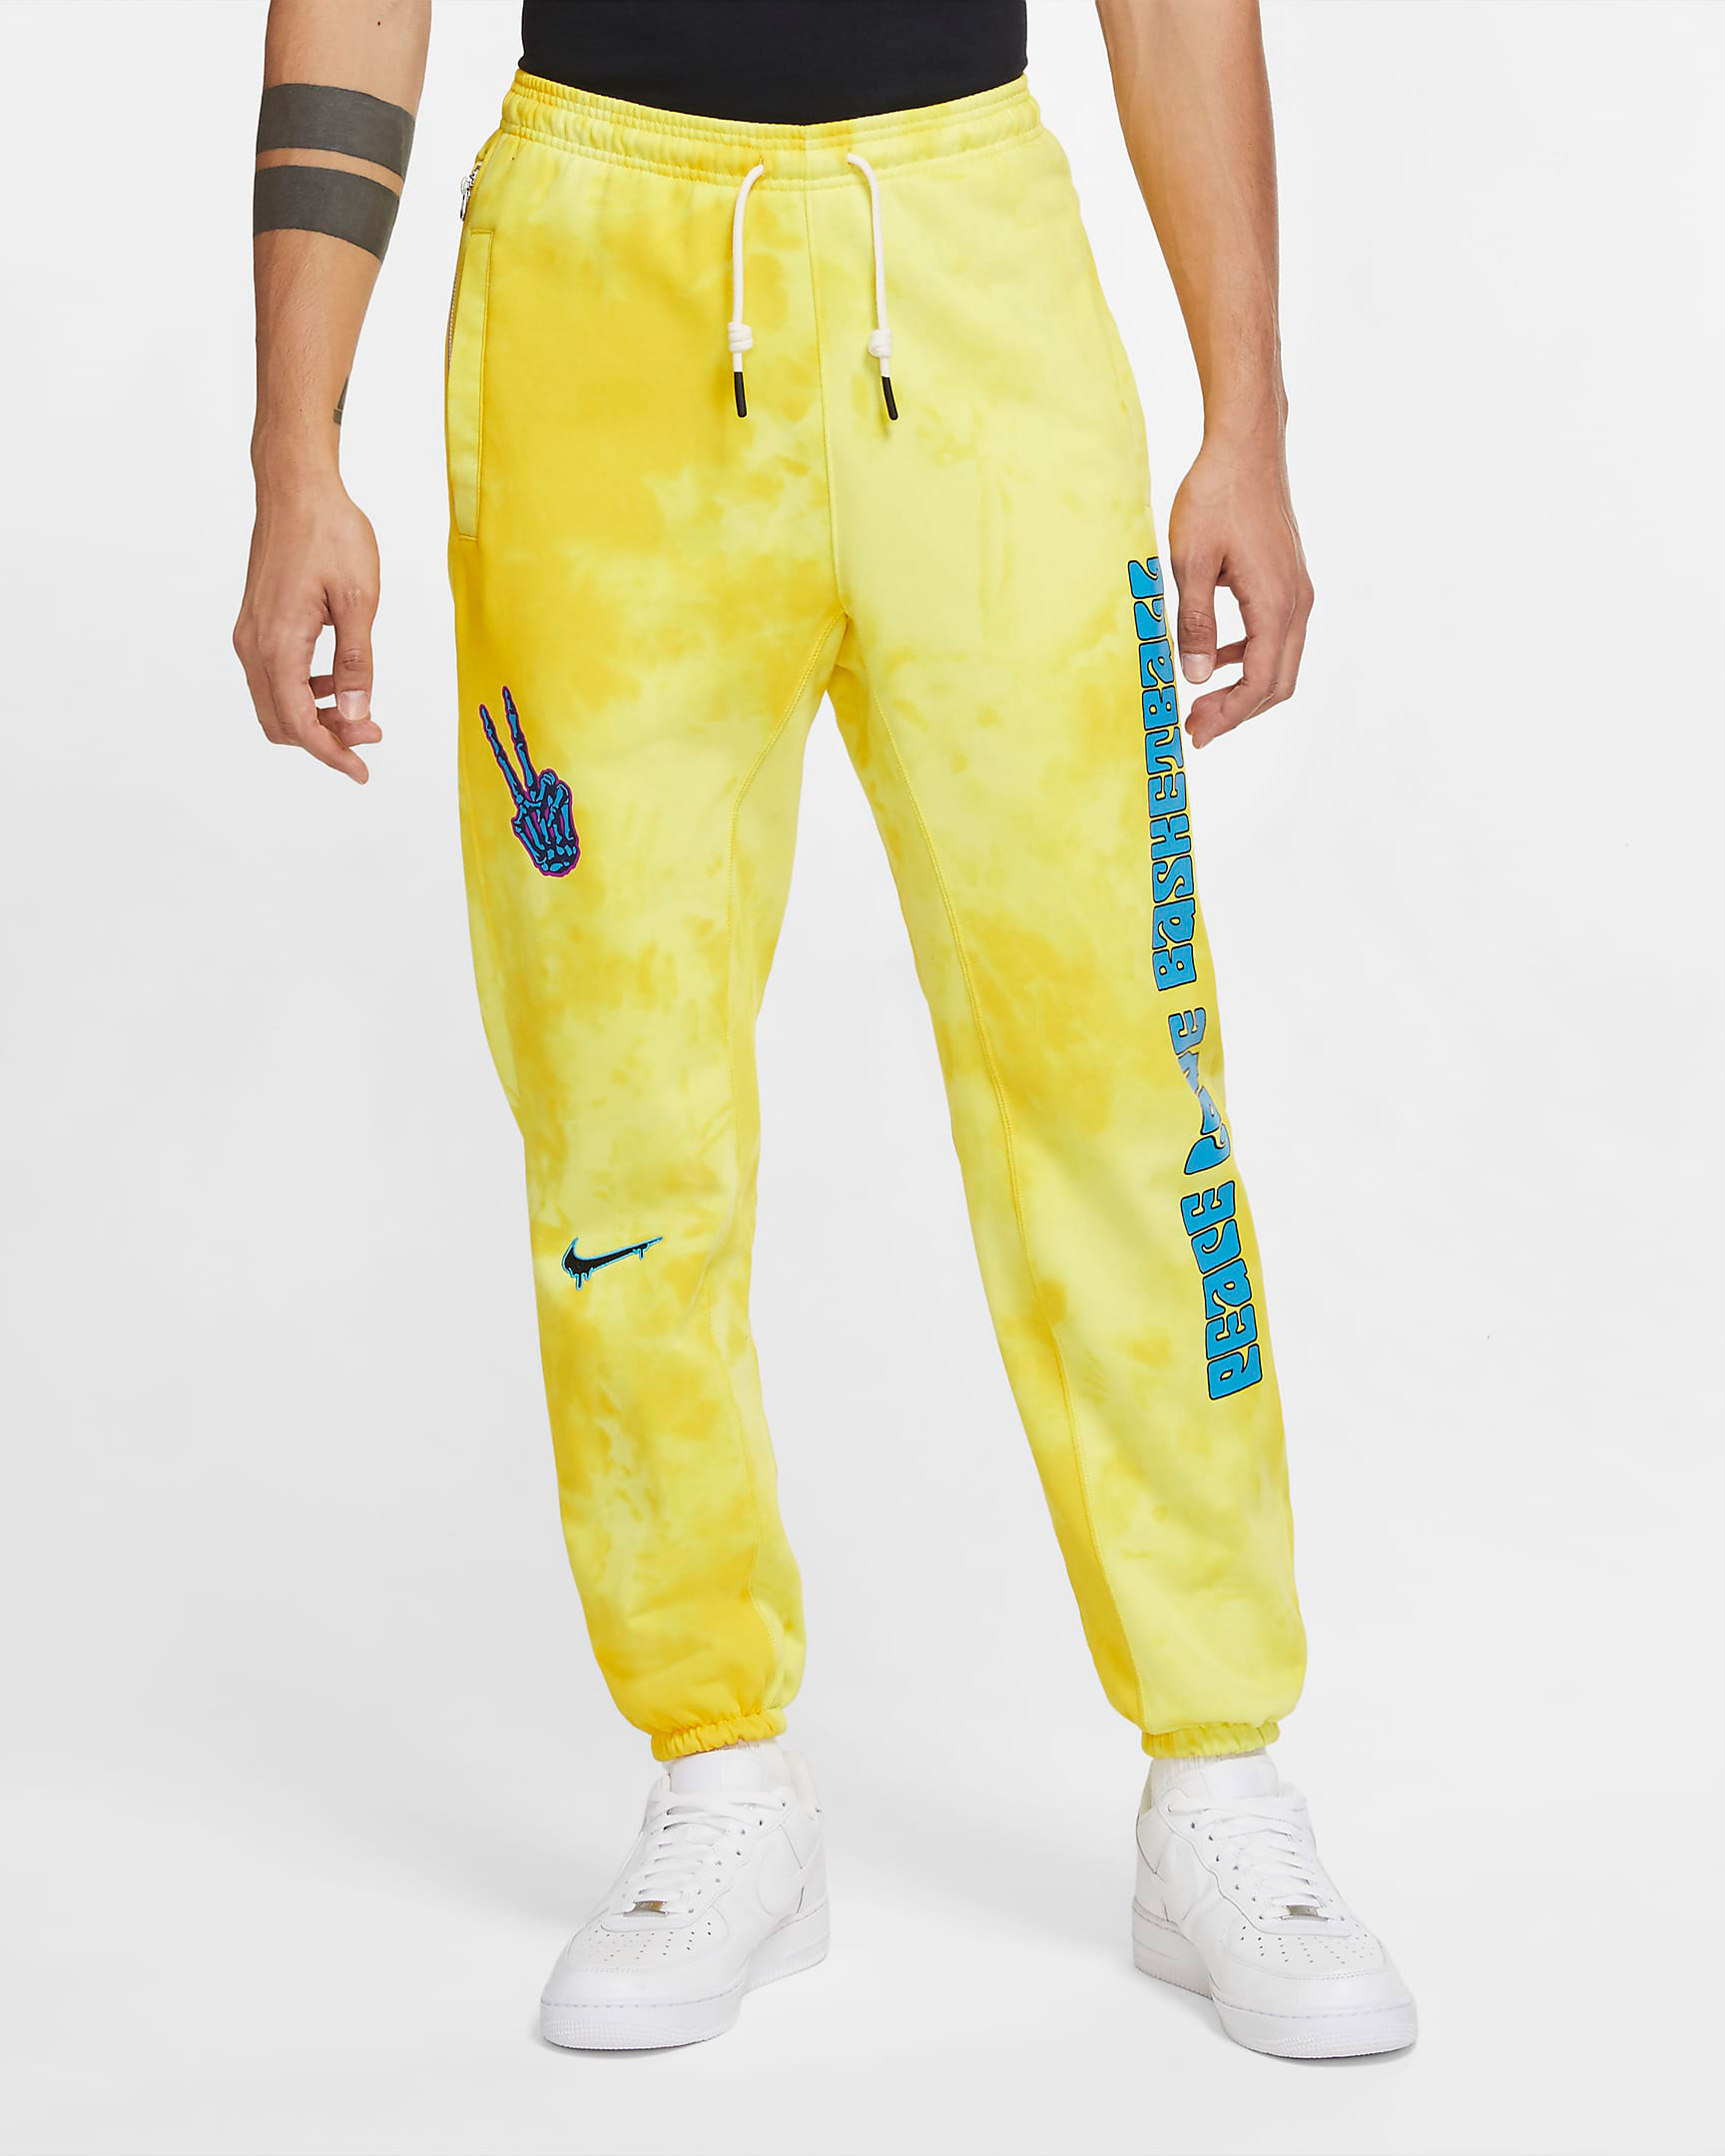 nike-peace-love-basketball-pants-yellow-1